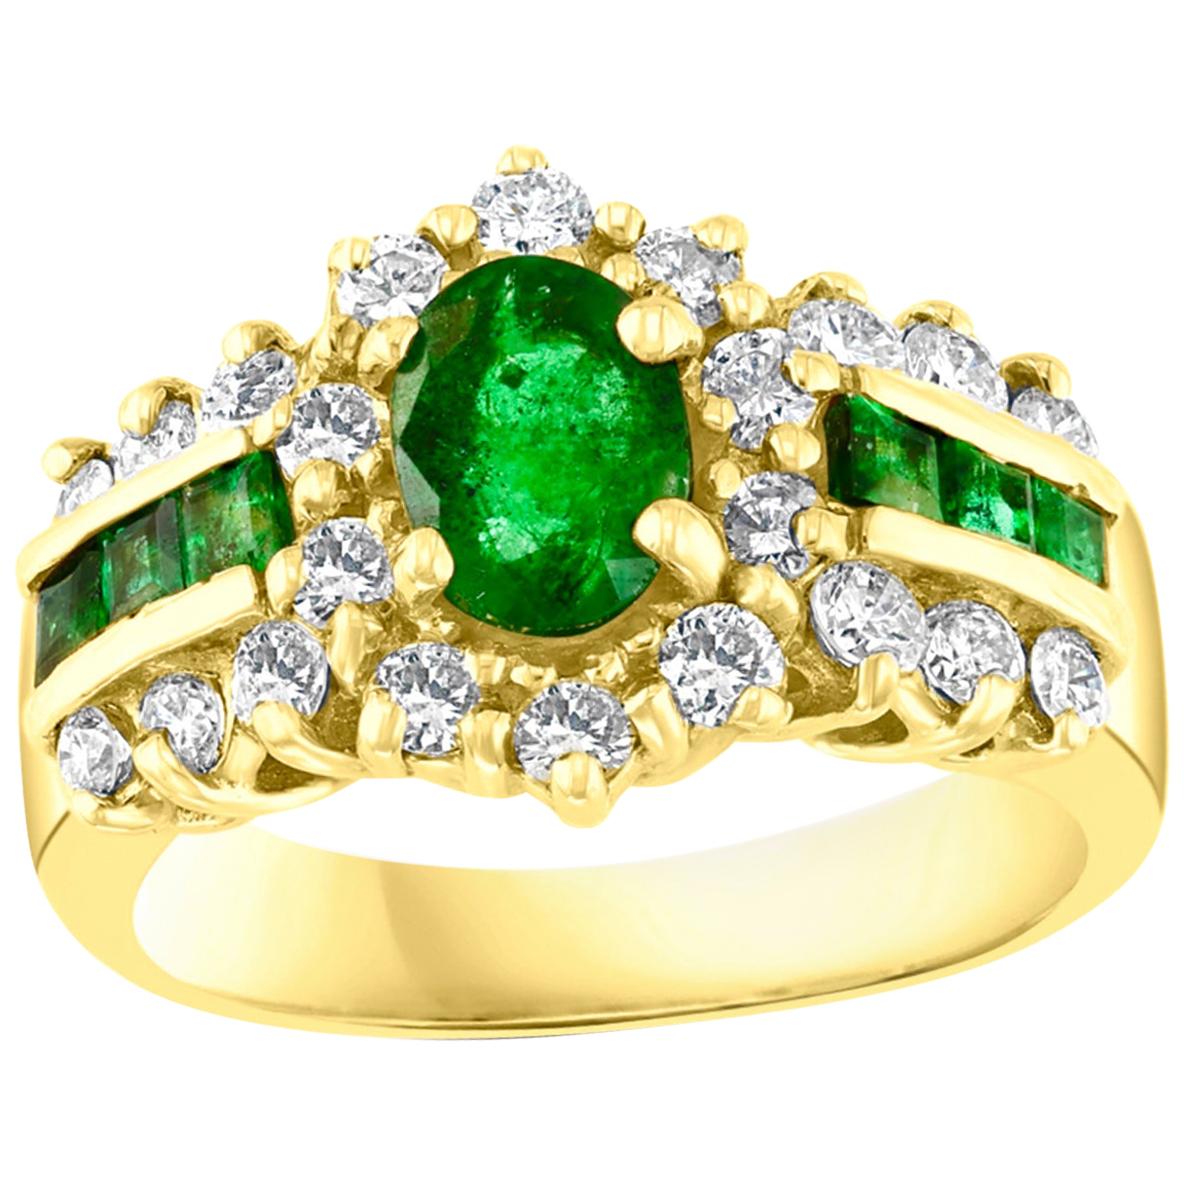 1 Carat Oval Cut Emerald and 1.0 Carat Diamond Ring 18 Karat Yellow Gold For Sale